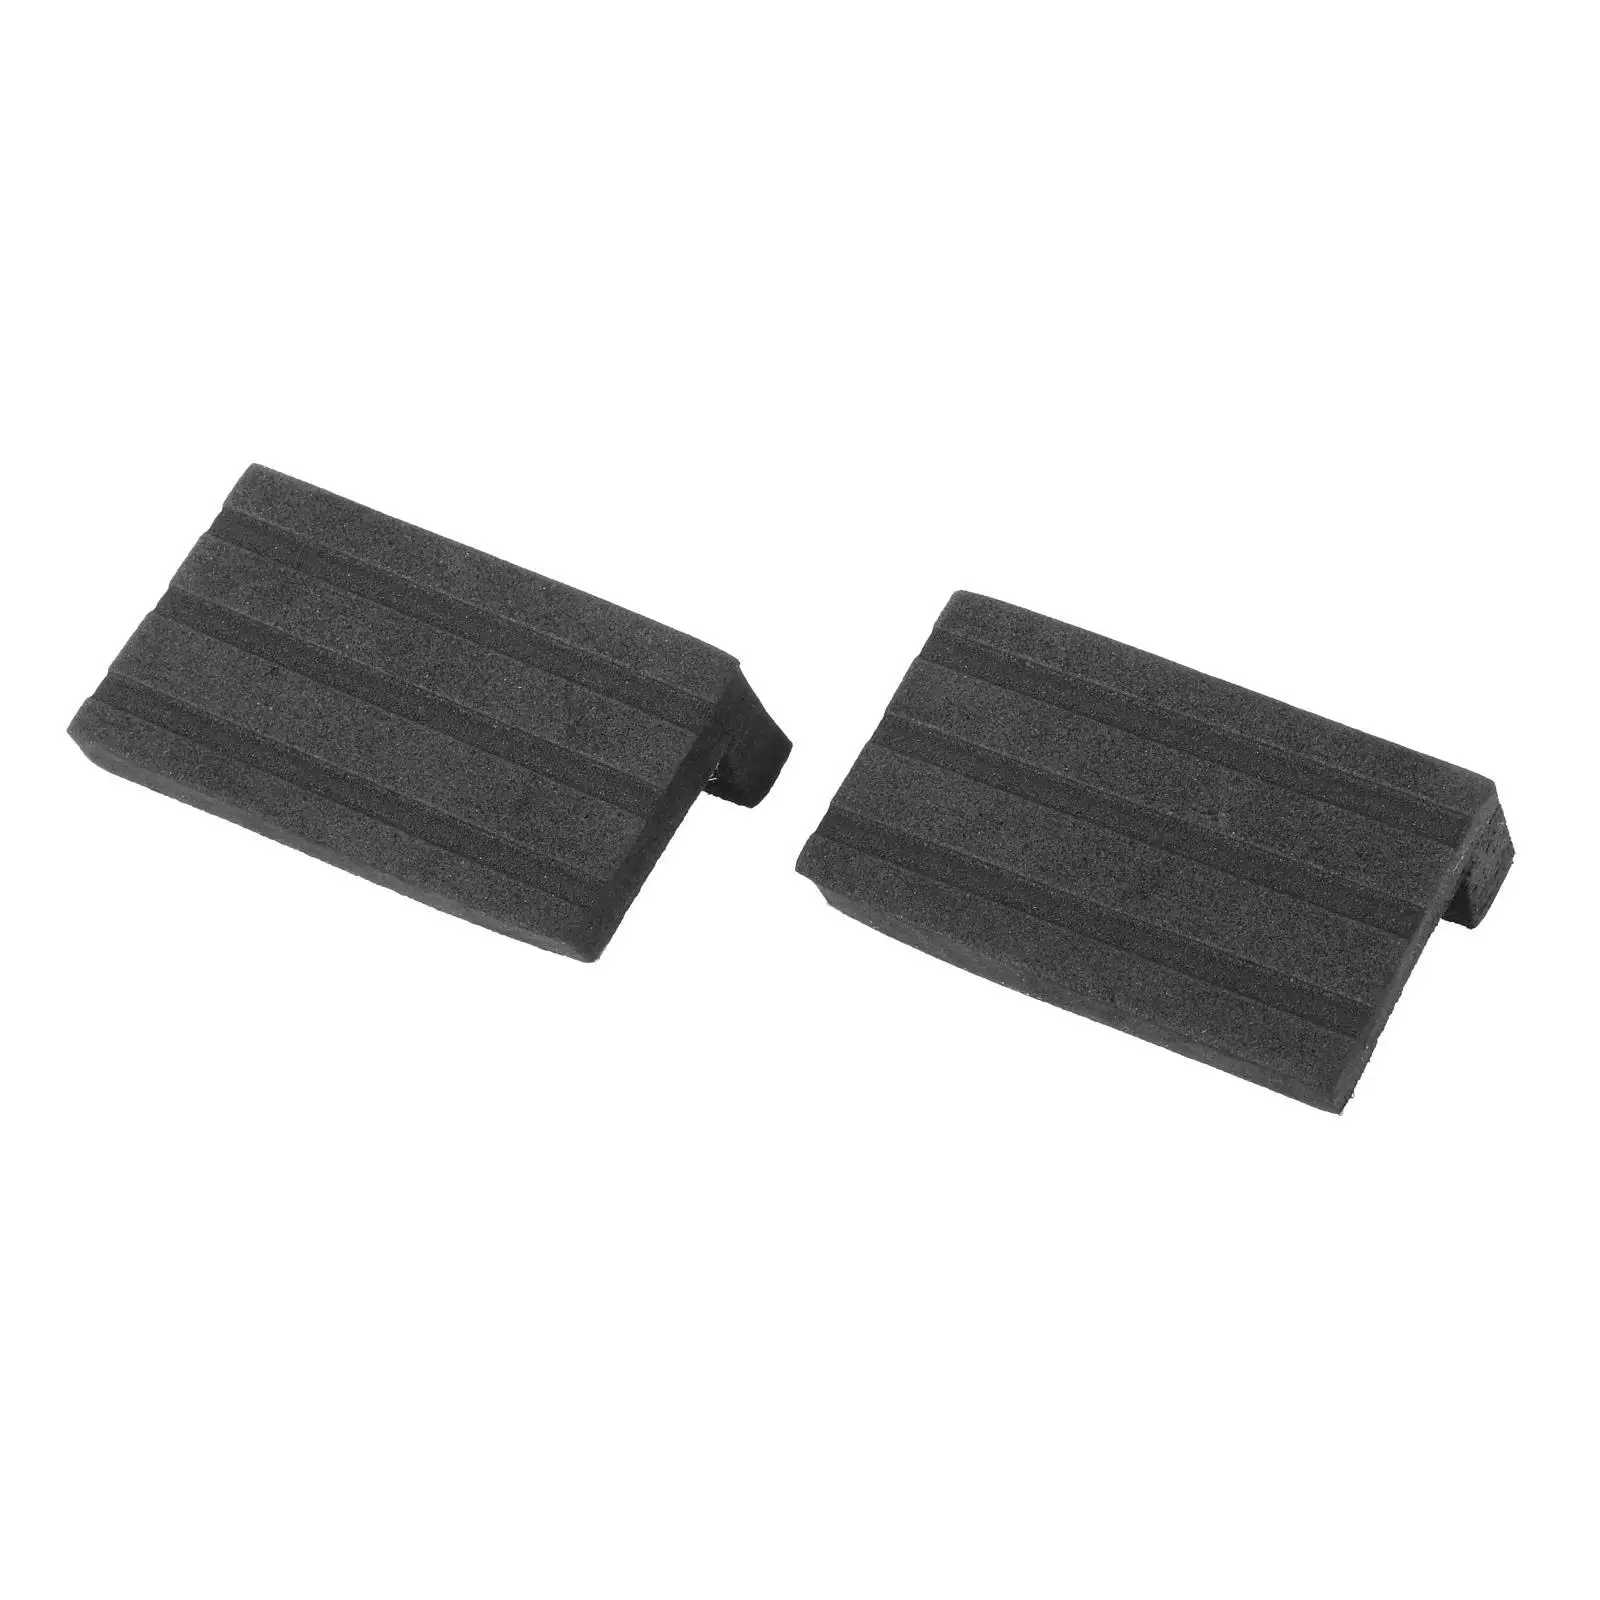 2 Packs Bass Pads Non Slip Fixed Floor Anti-Slip Cotton Drum Kit Accessories Black Hoop Protector